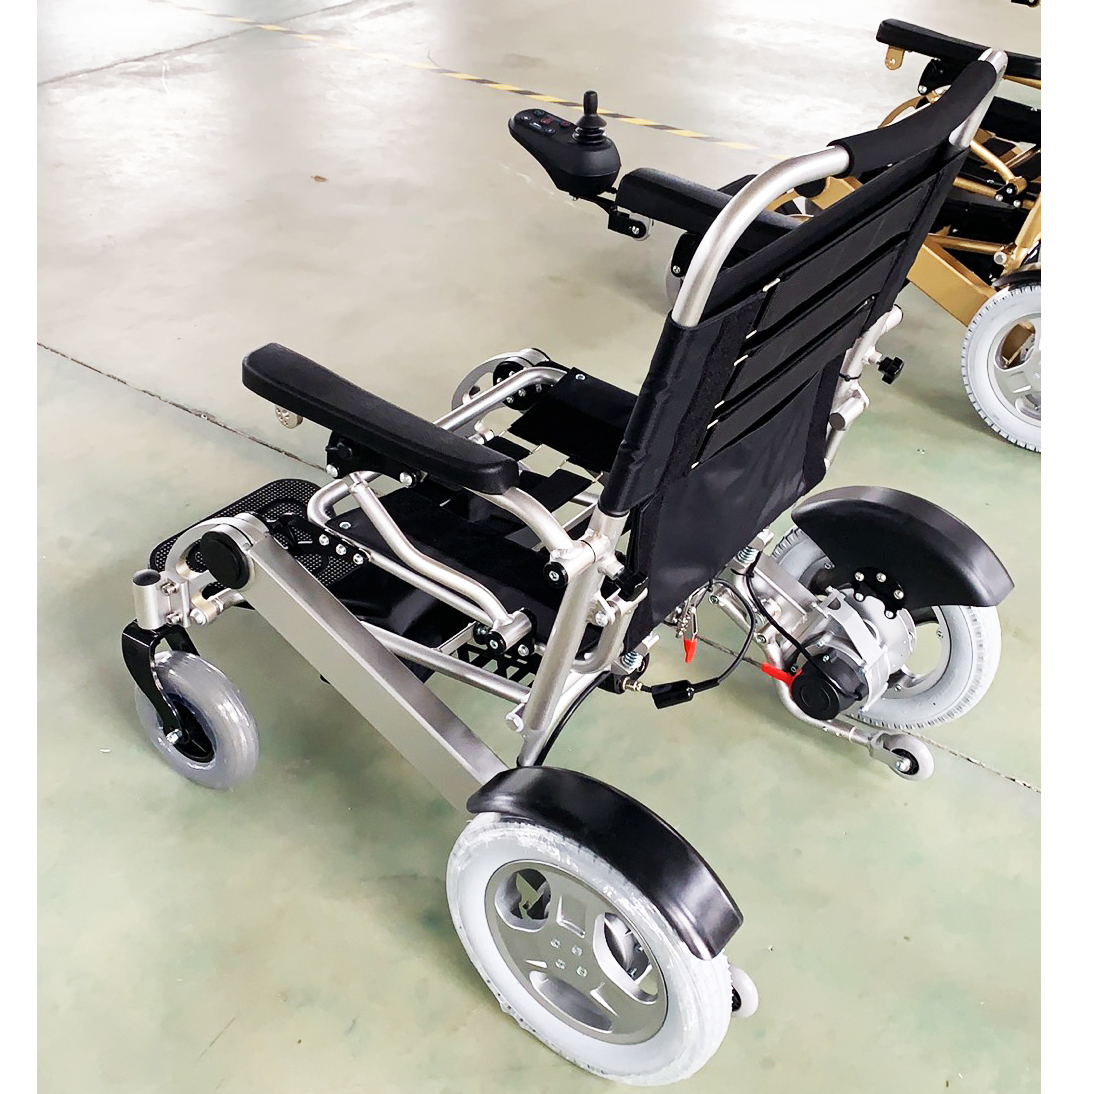 Freedom Folding Ultra Lightweight Extra Wide Power Wheelchair